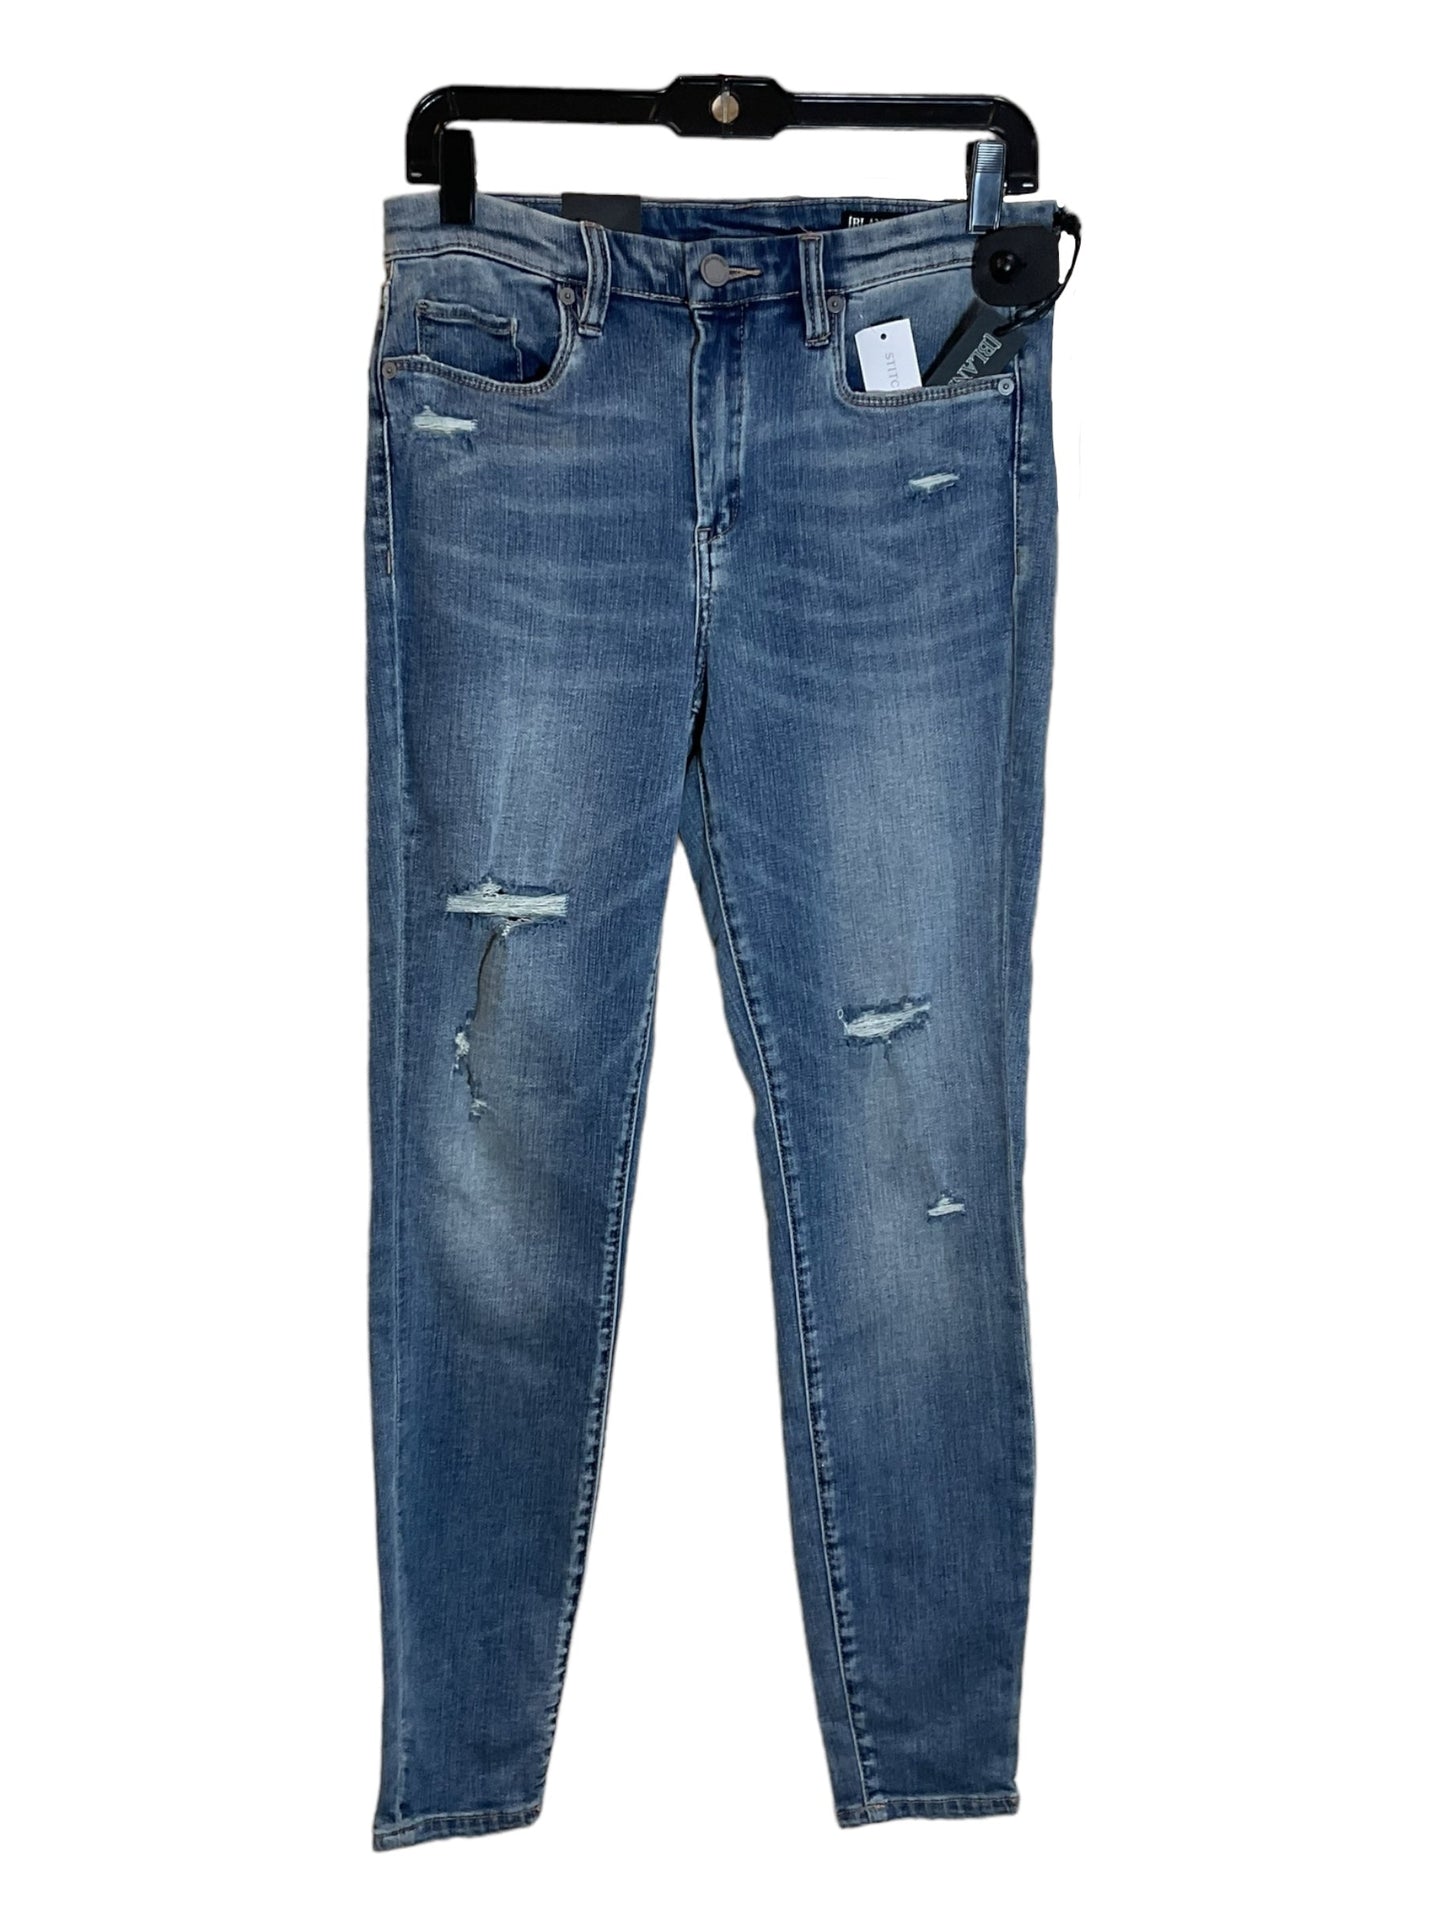 Black Denim Jeans Designer Madewell, Size 8